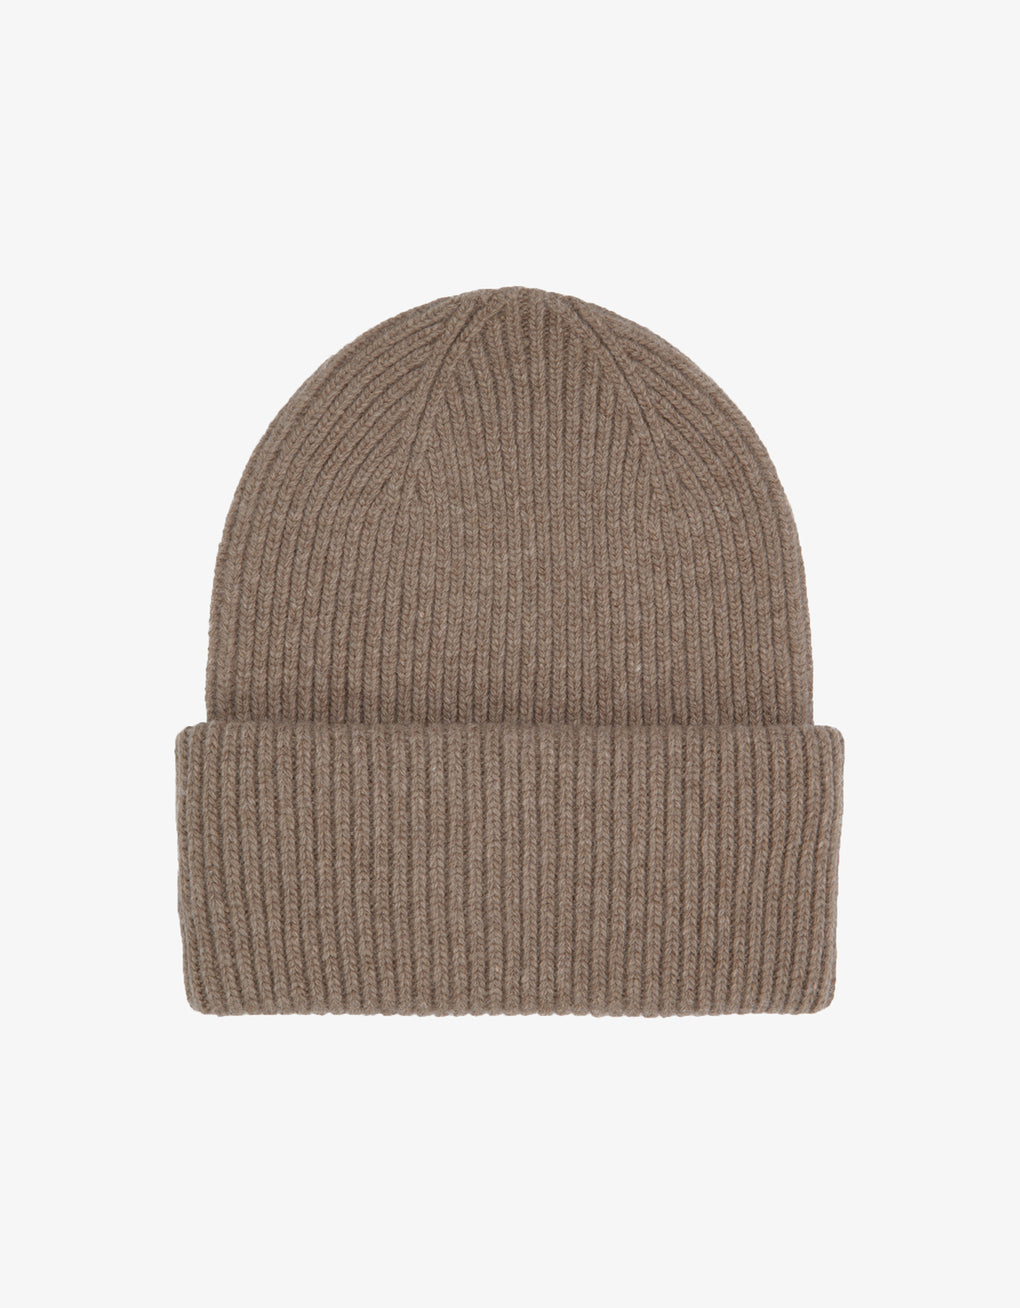 Merino wool hat - warm taupe